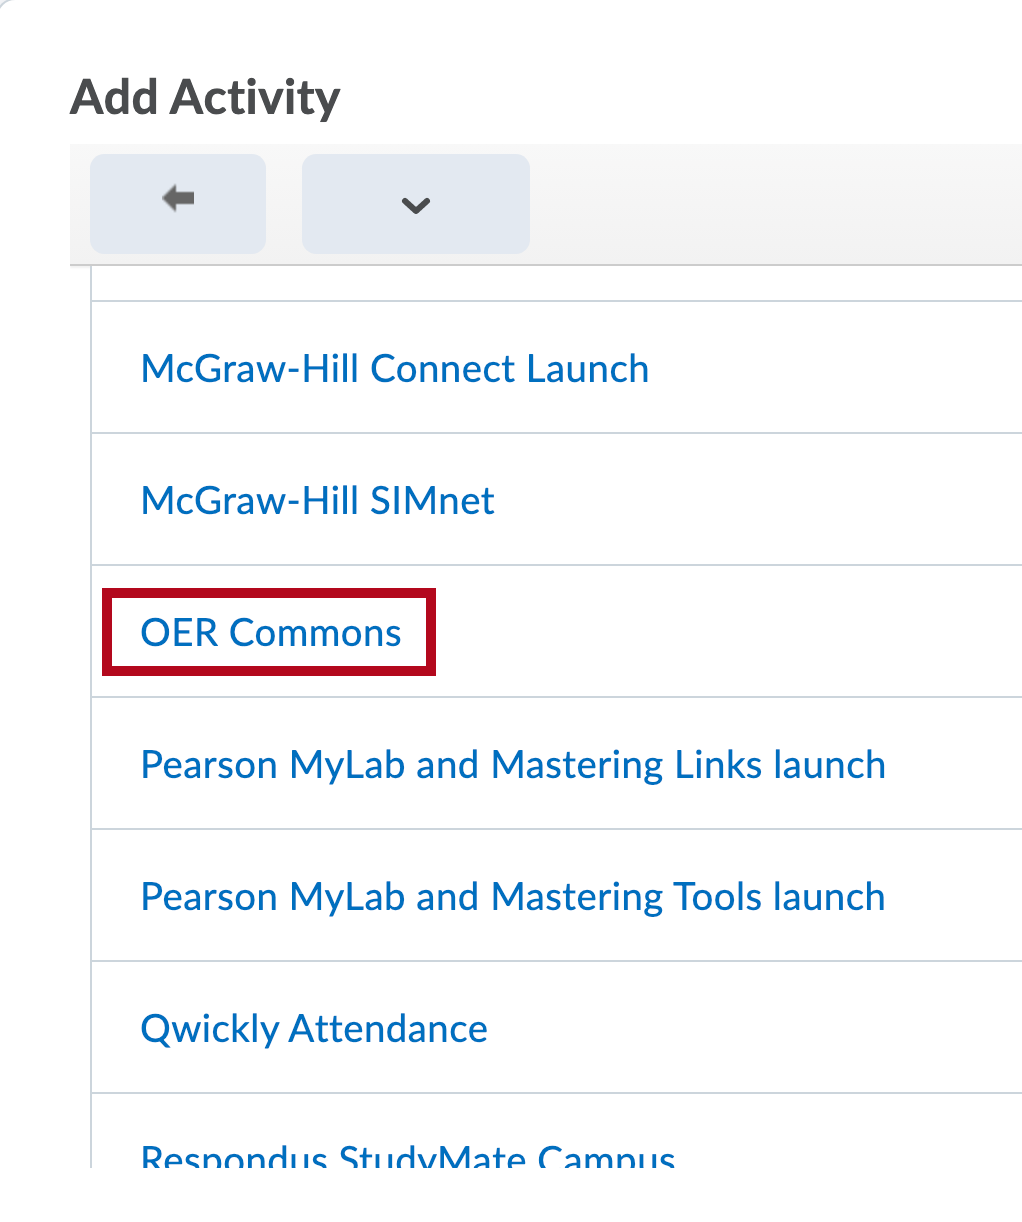 Identifies OER Commons option